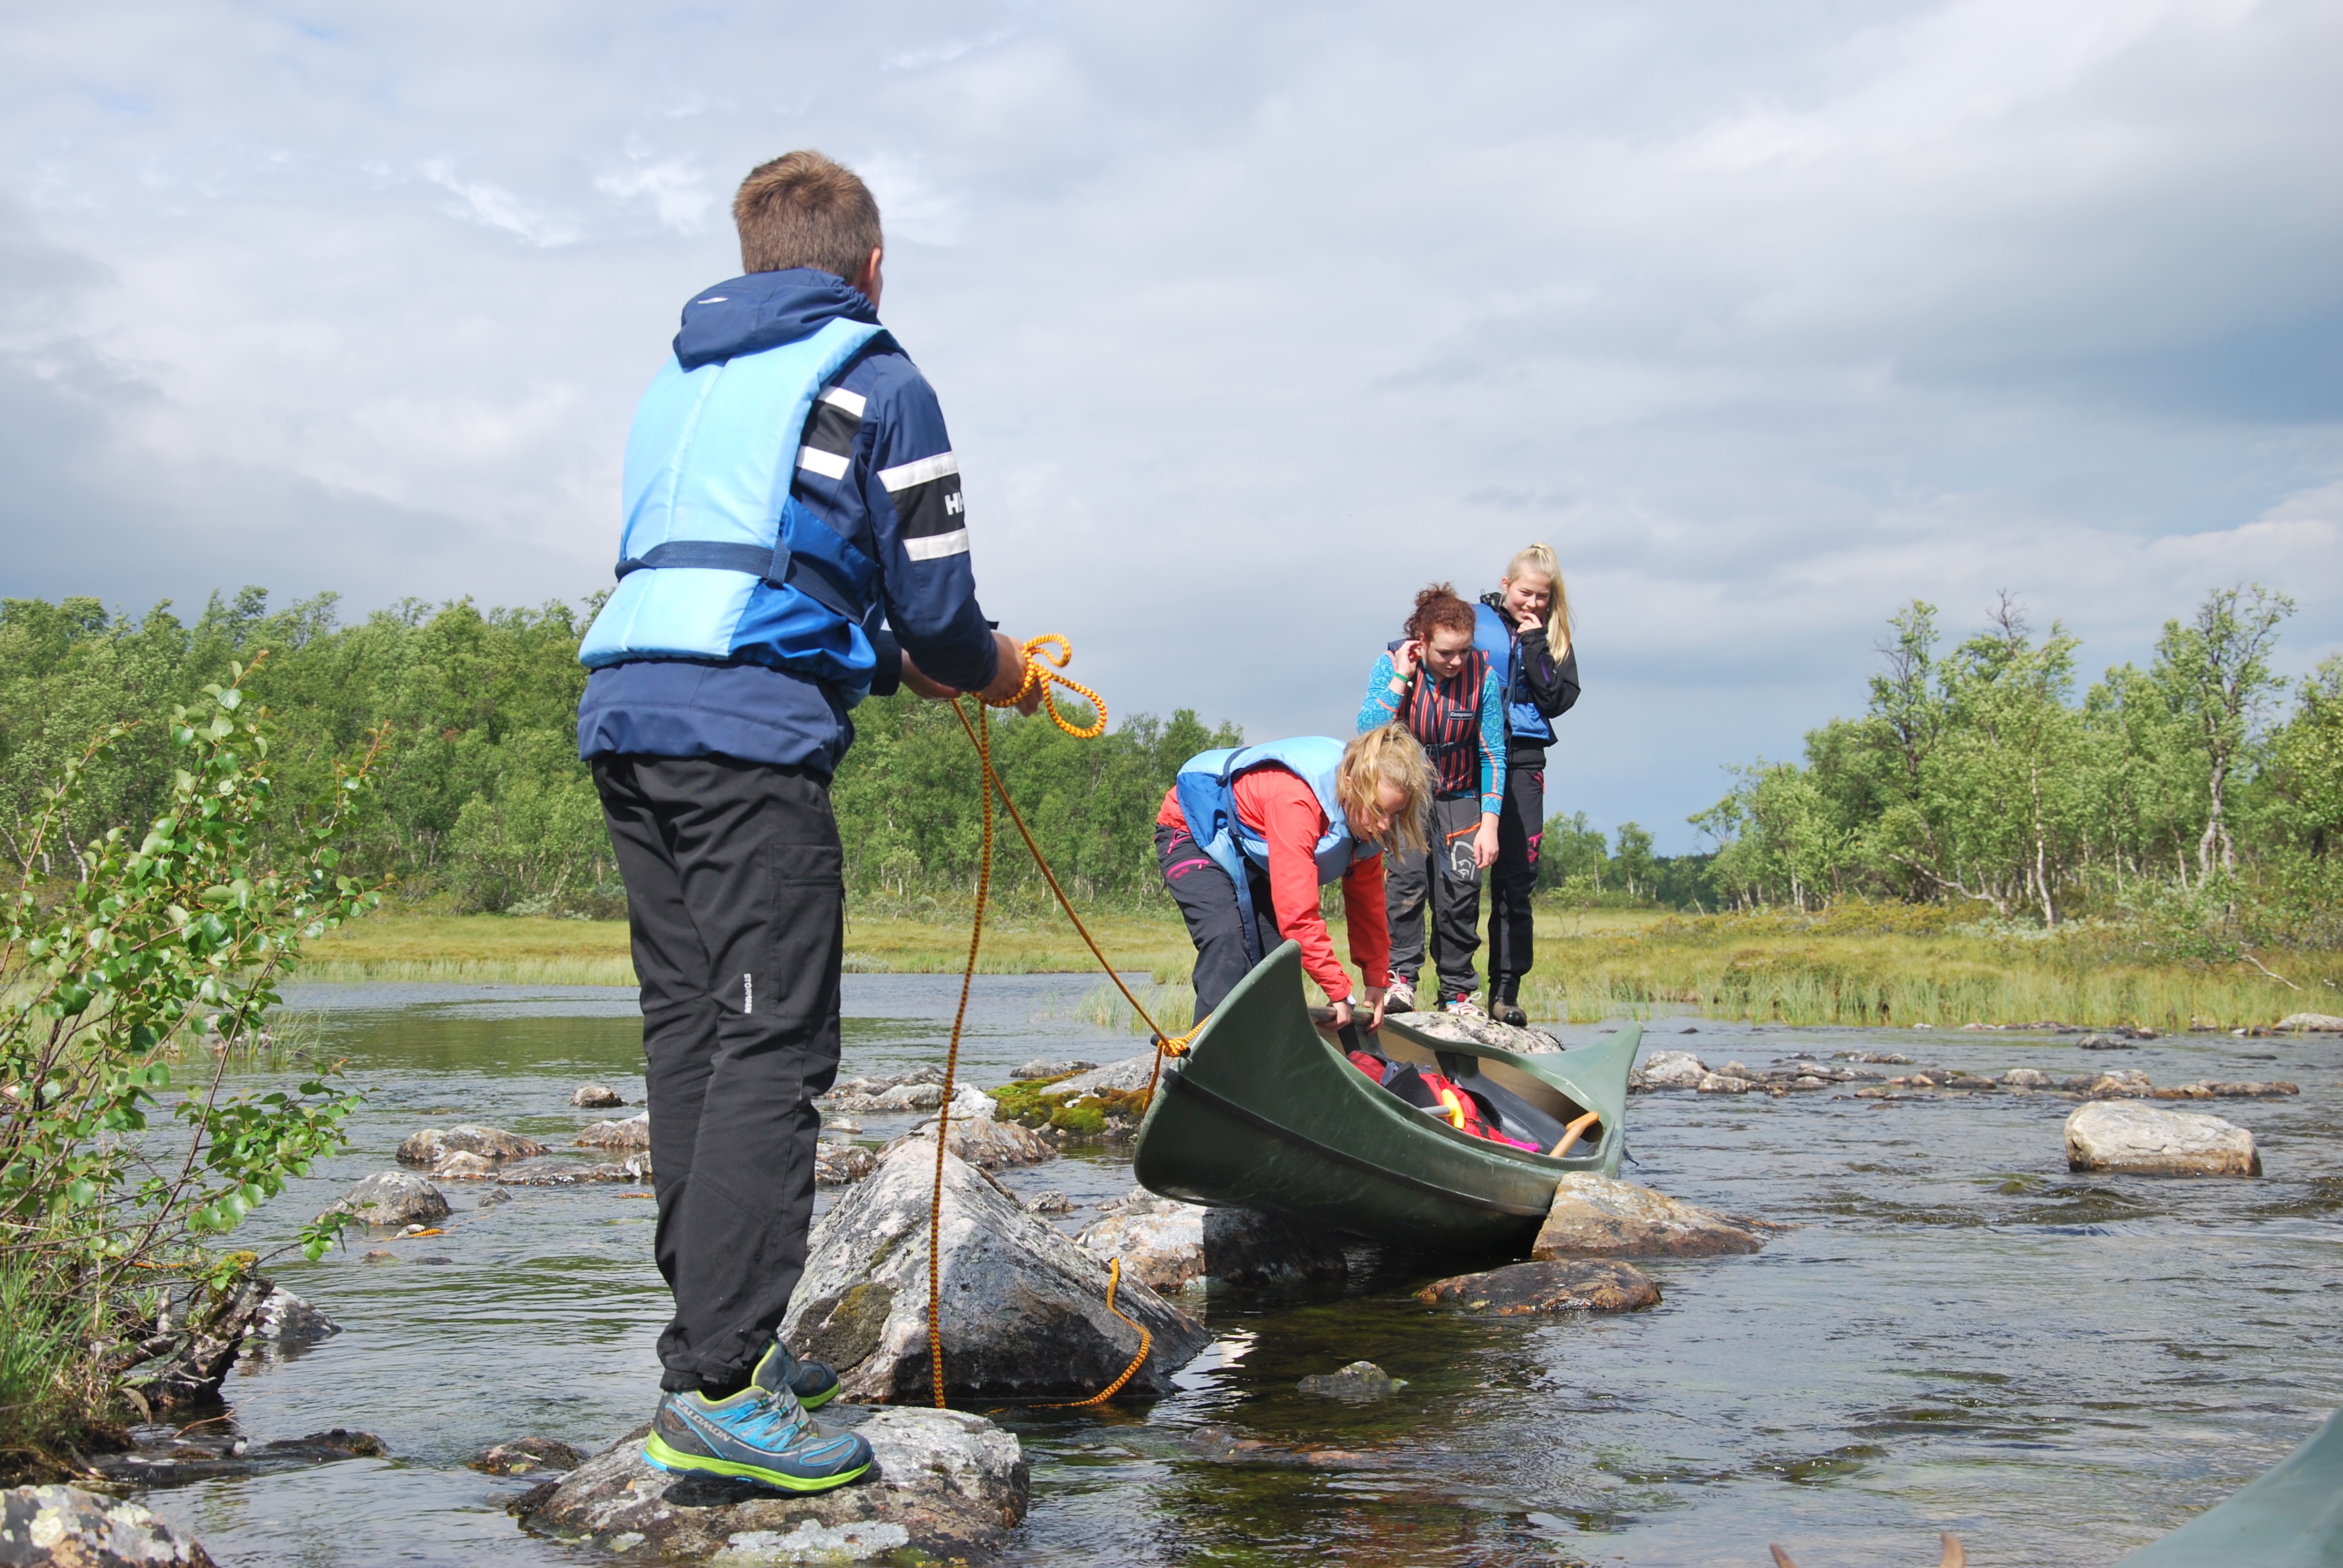 Ungdommer på kanotur. Foto: Fjelldriv. CC-BY-SA